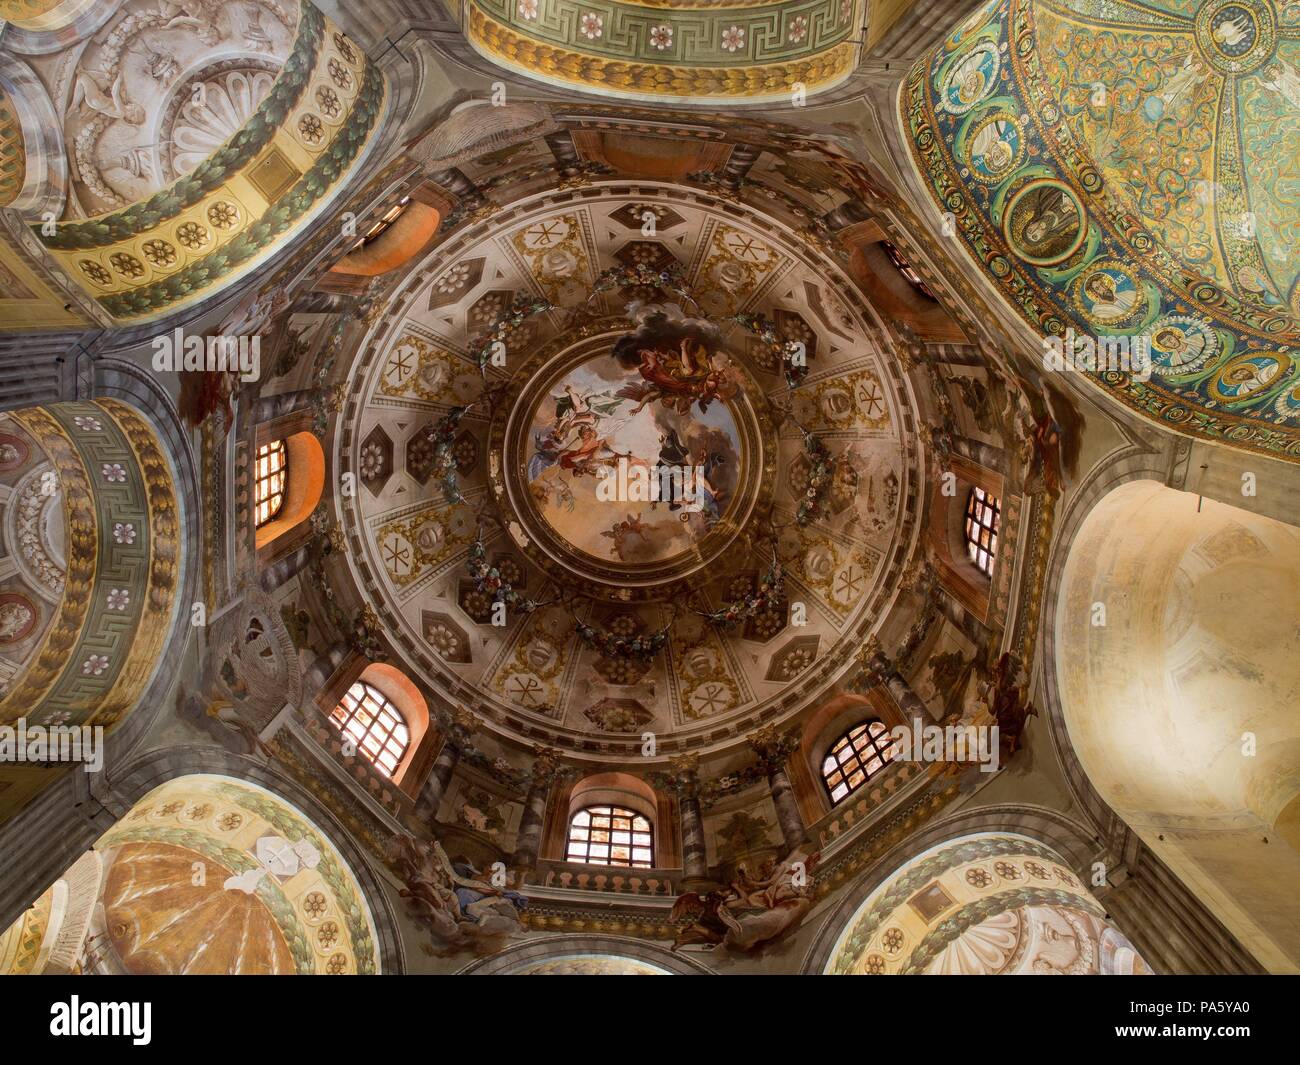 Interior mosaics of the central dome of the church of San Vital de Ravenna,  Siglo VI, Ravenna, Emilia-Romagna, Italy Stock Photo - Alamy